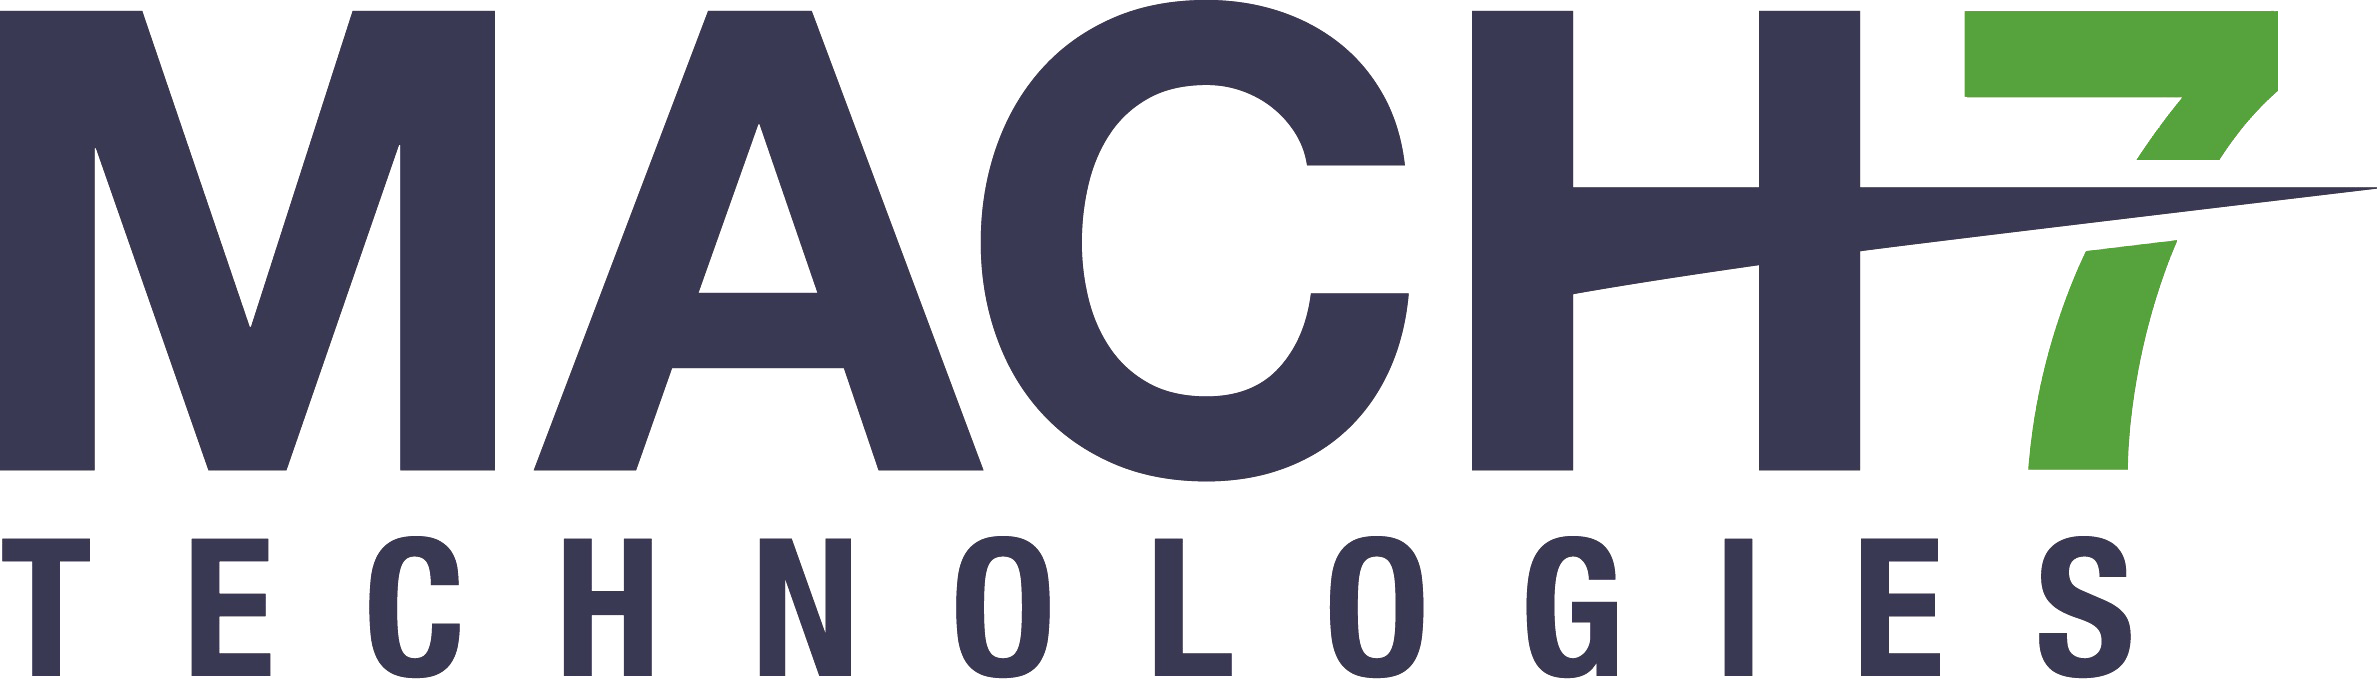 Mach7 Technologies Limited Logo